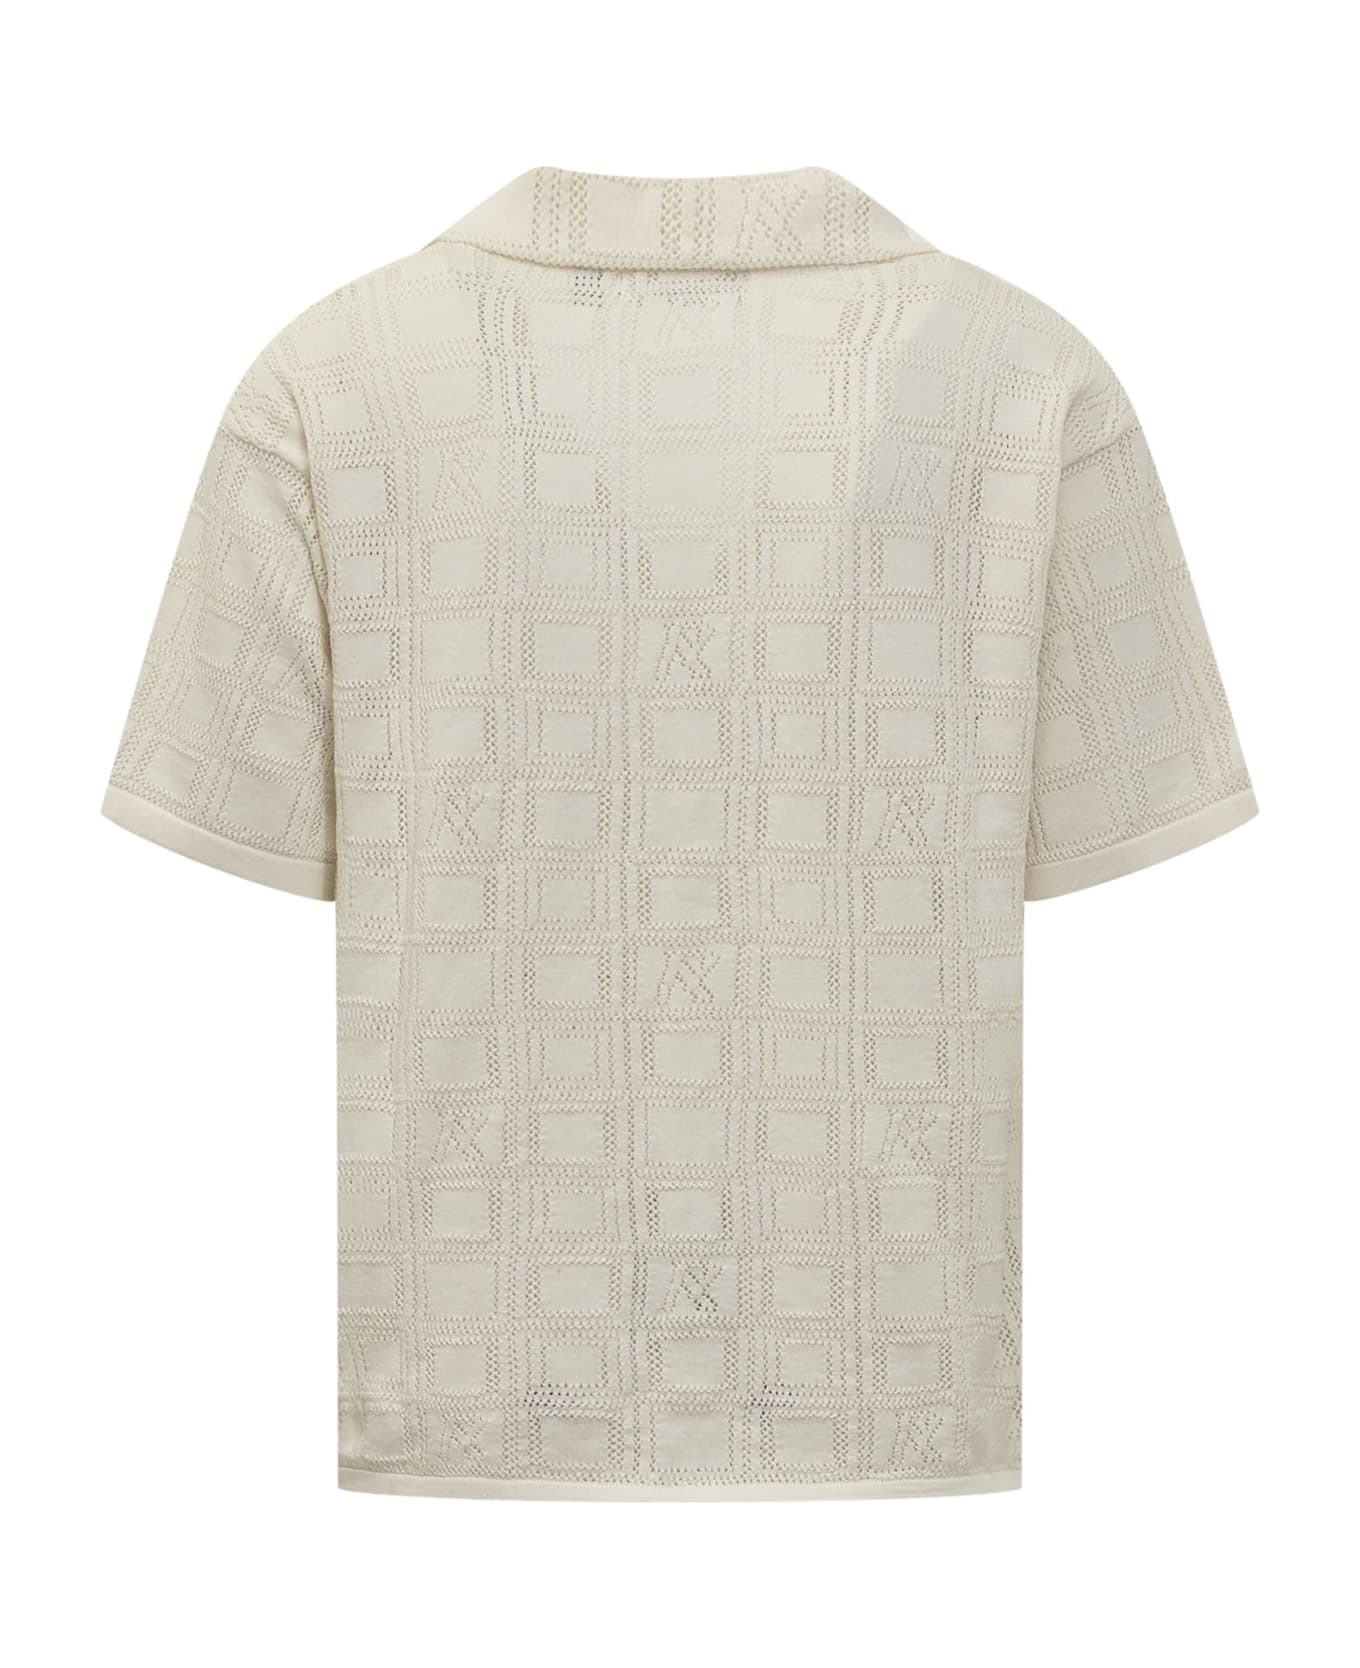 REPRESENT Shirt With Geometric Pattern - CHALK